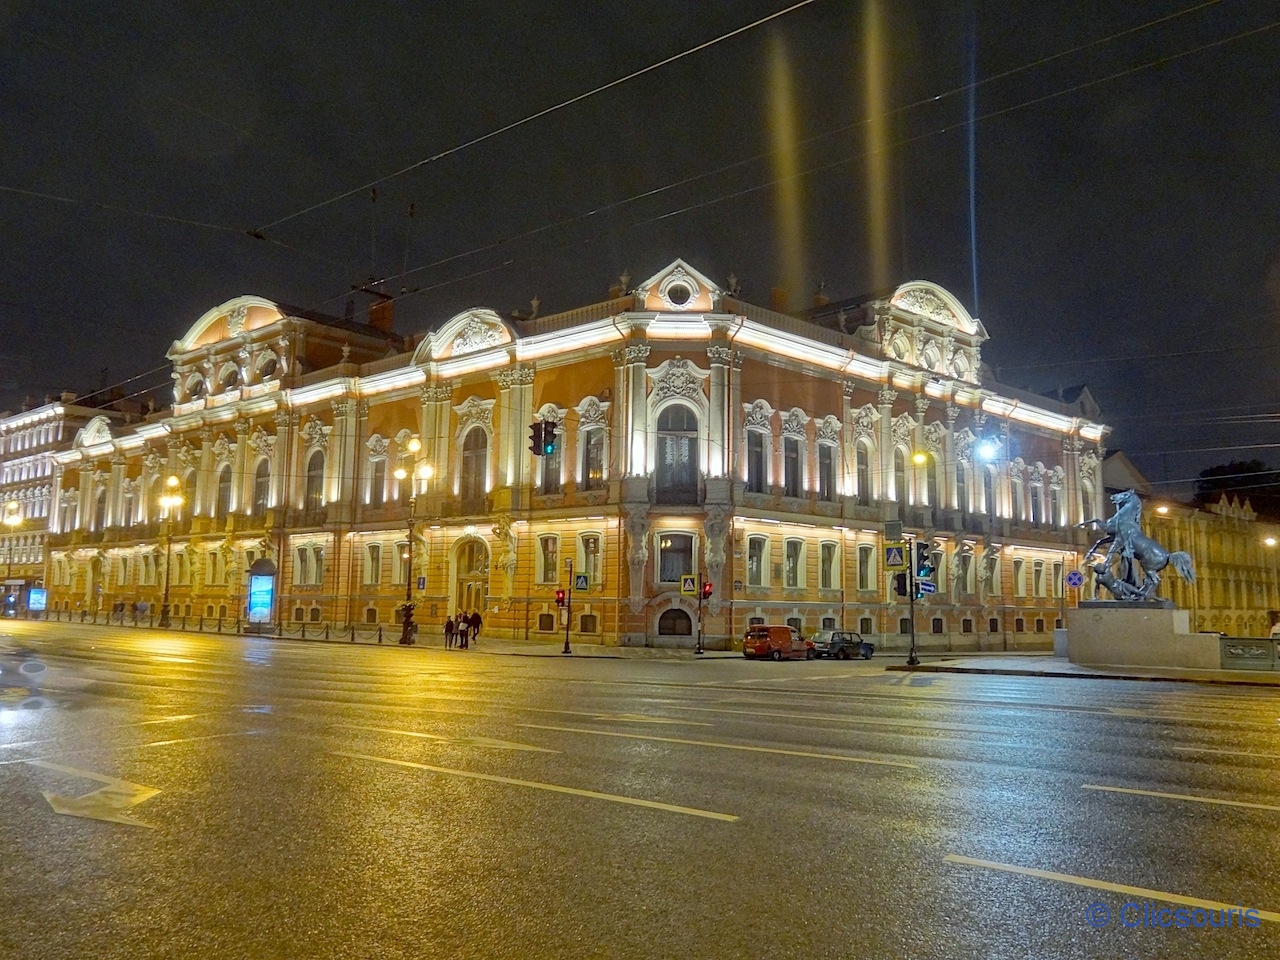 Saint-Pétersbourg perspective Nevski